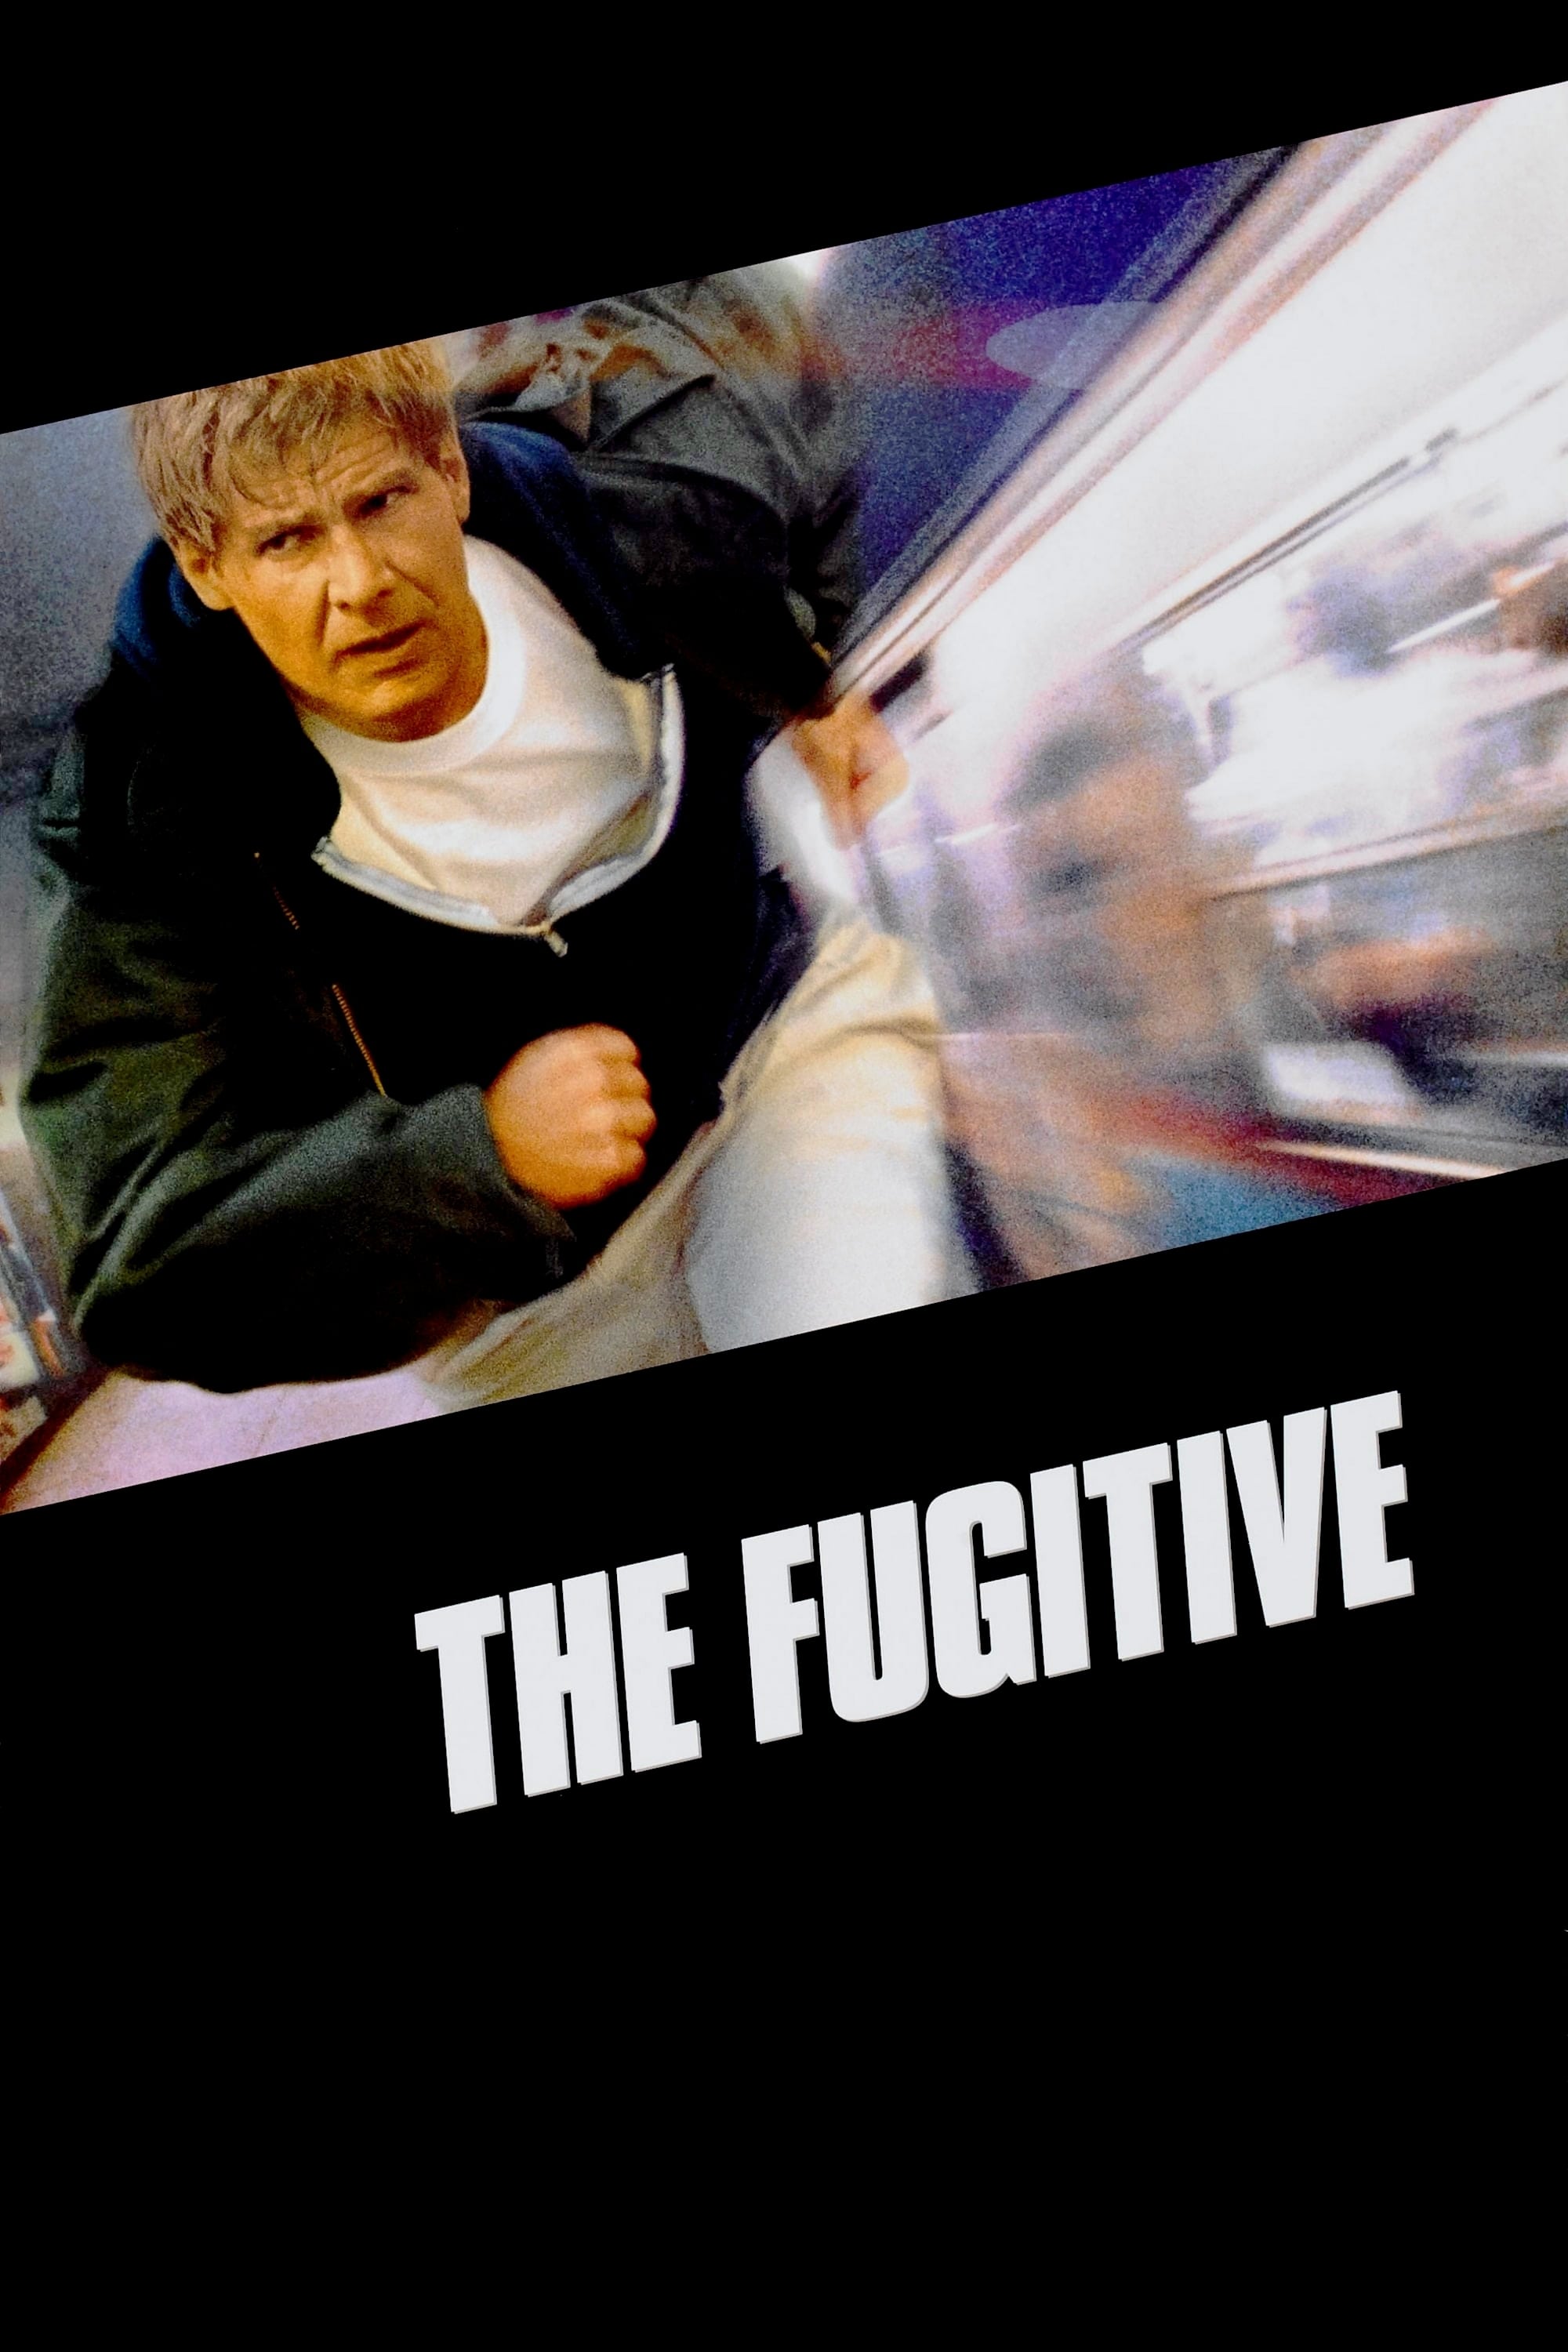 O Fugitivo (1993)